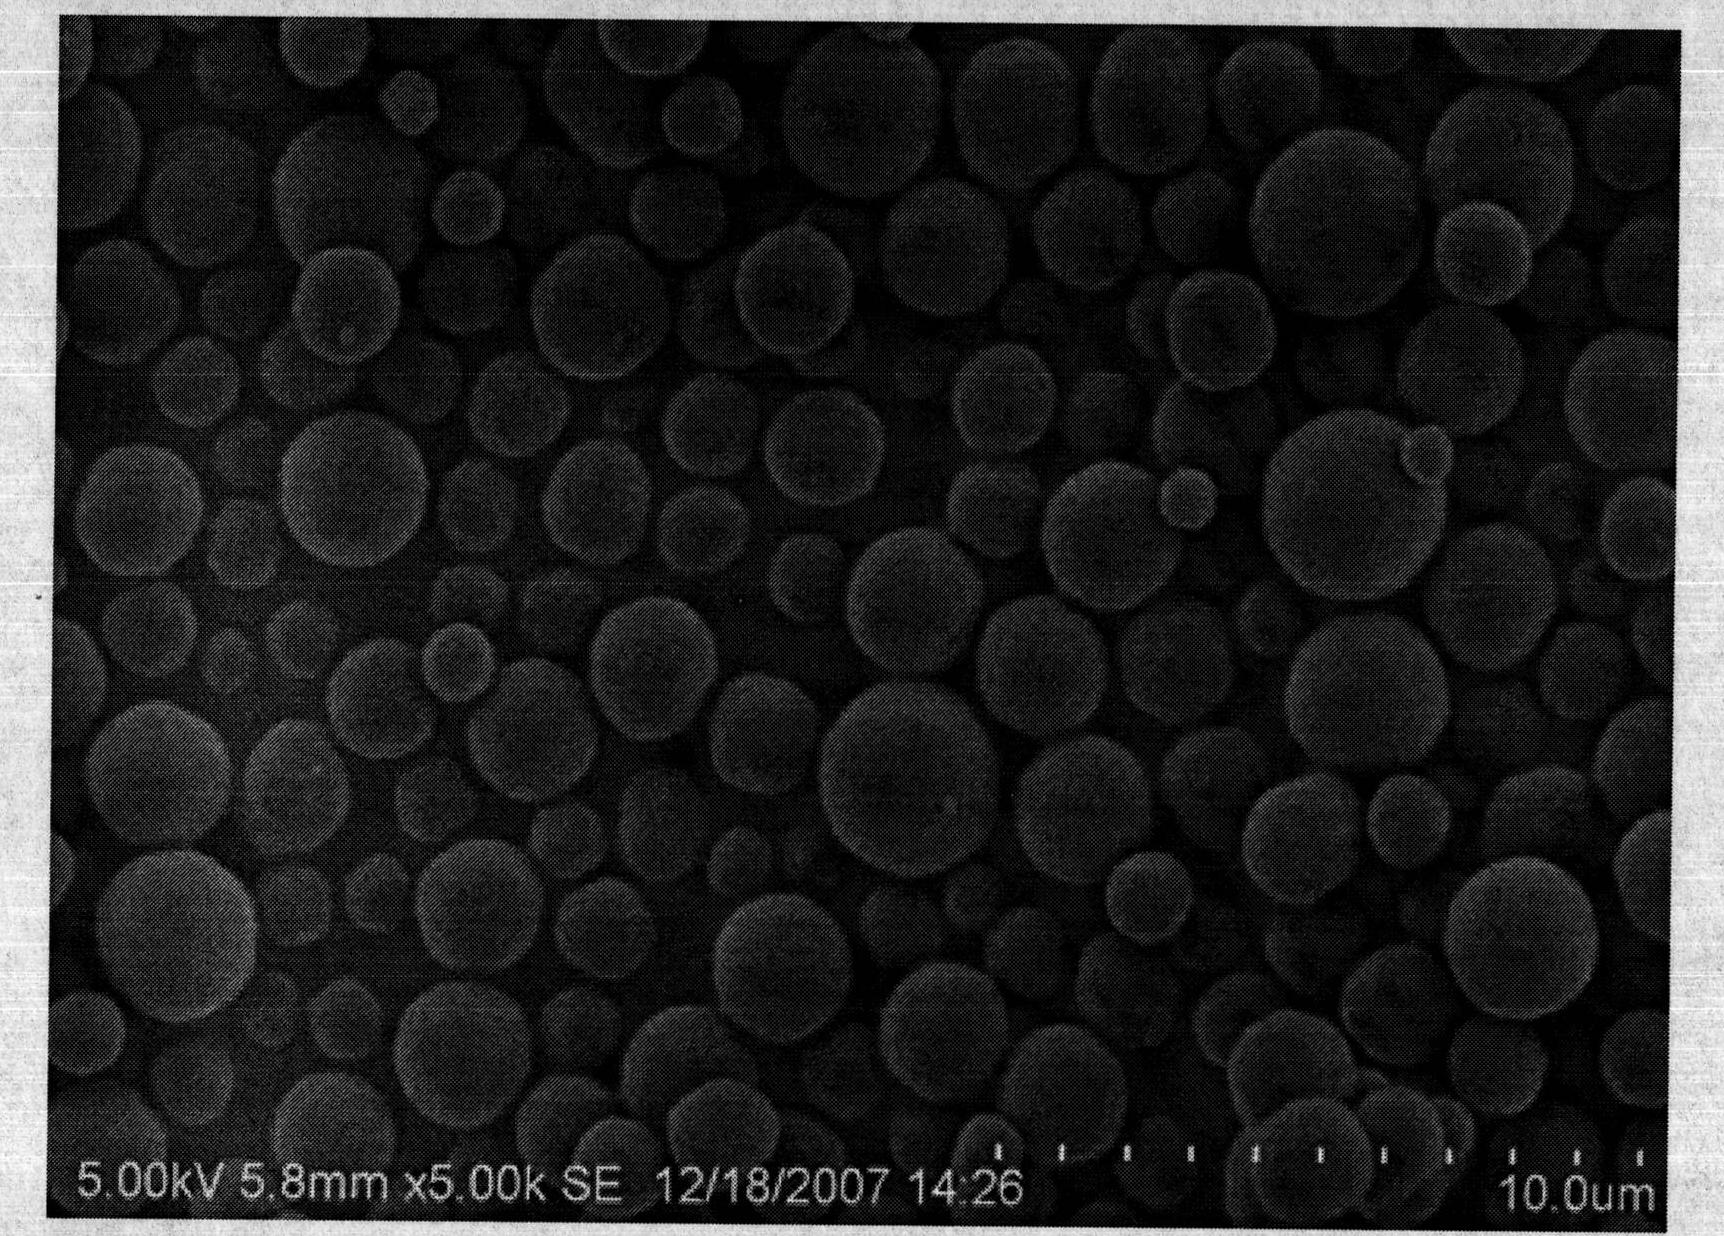 Method for preparing chloramphenicol molecularly imprinted polymeric microspheres